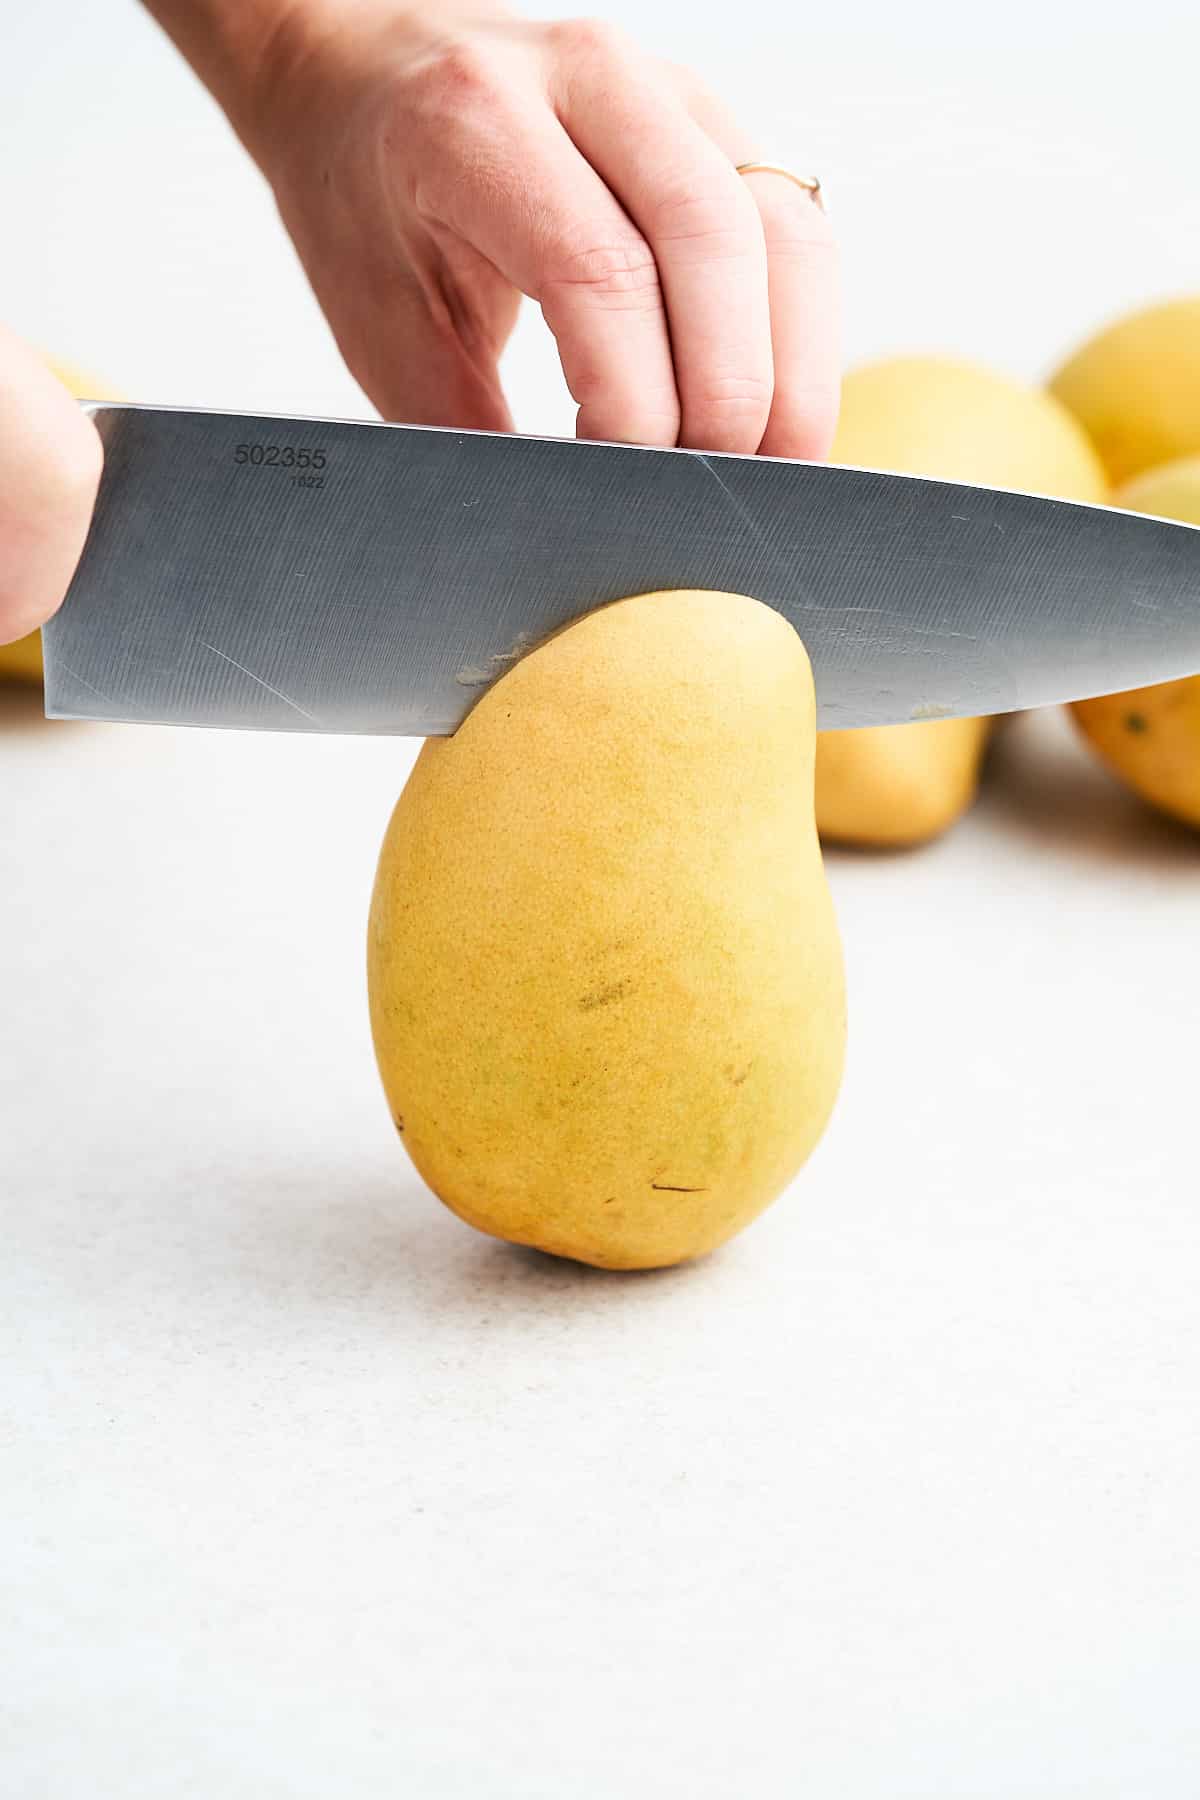 Cutting a mango lengthwise.